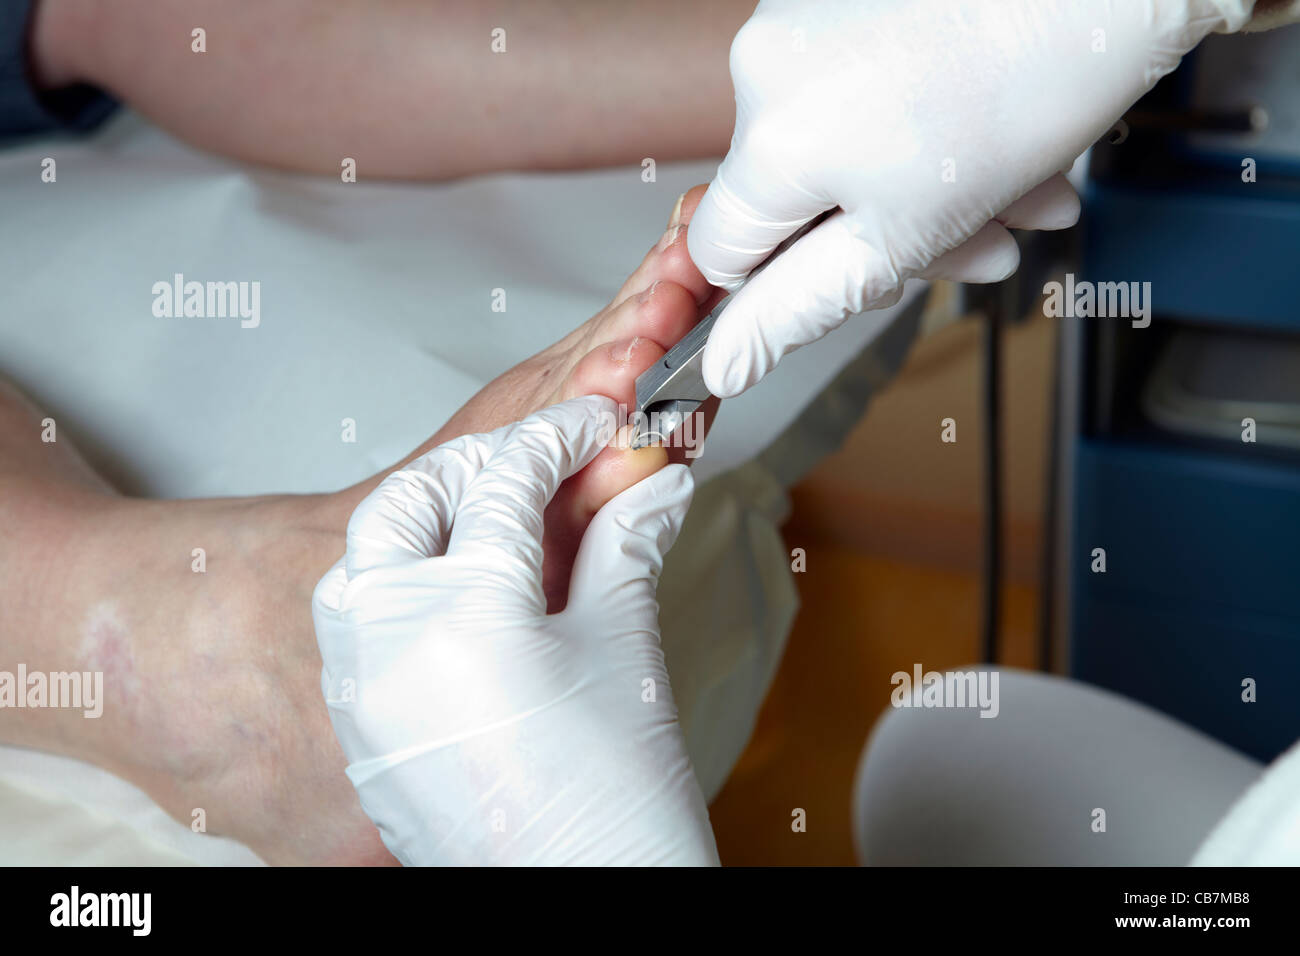 A Podiatrist cut the toenails of a woman Stock Photo